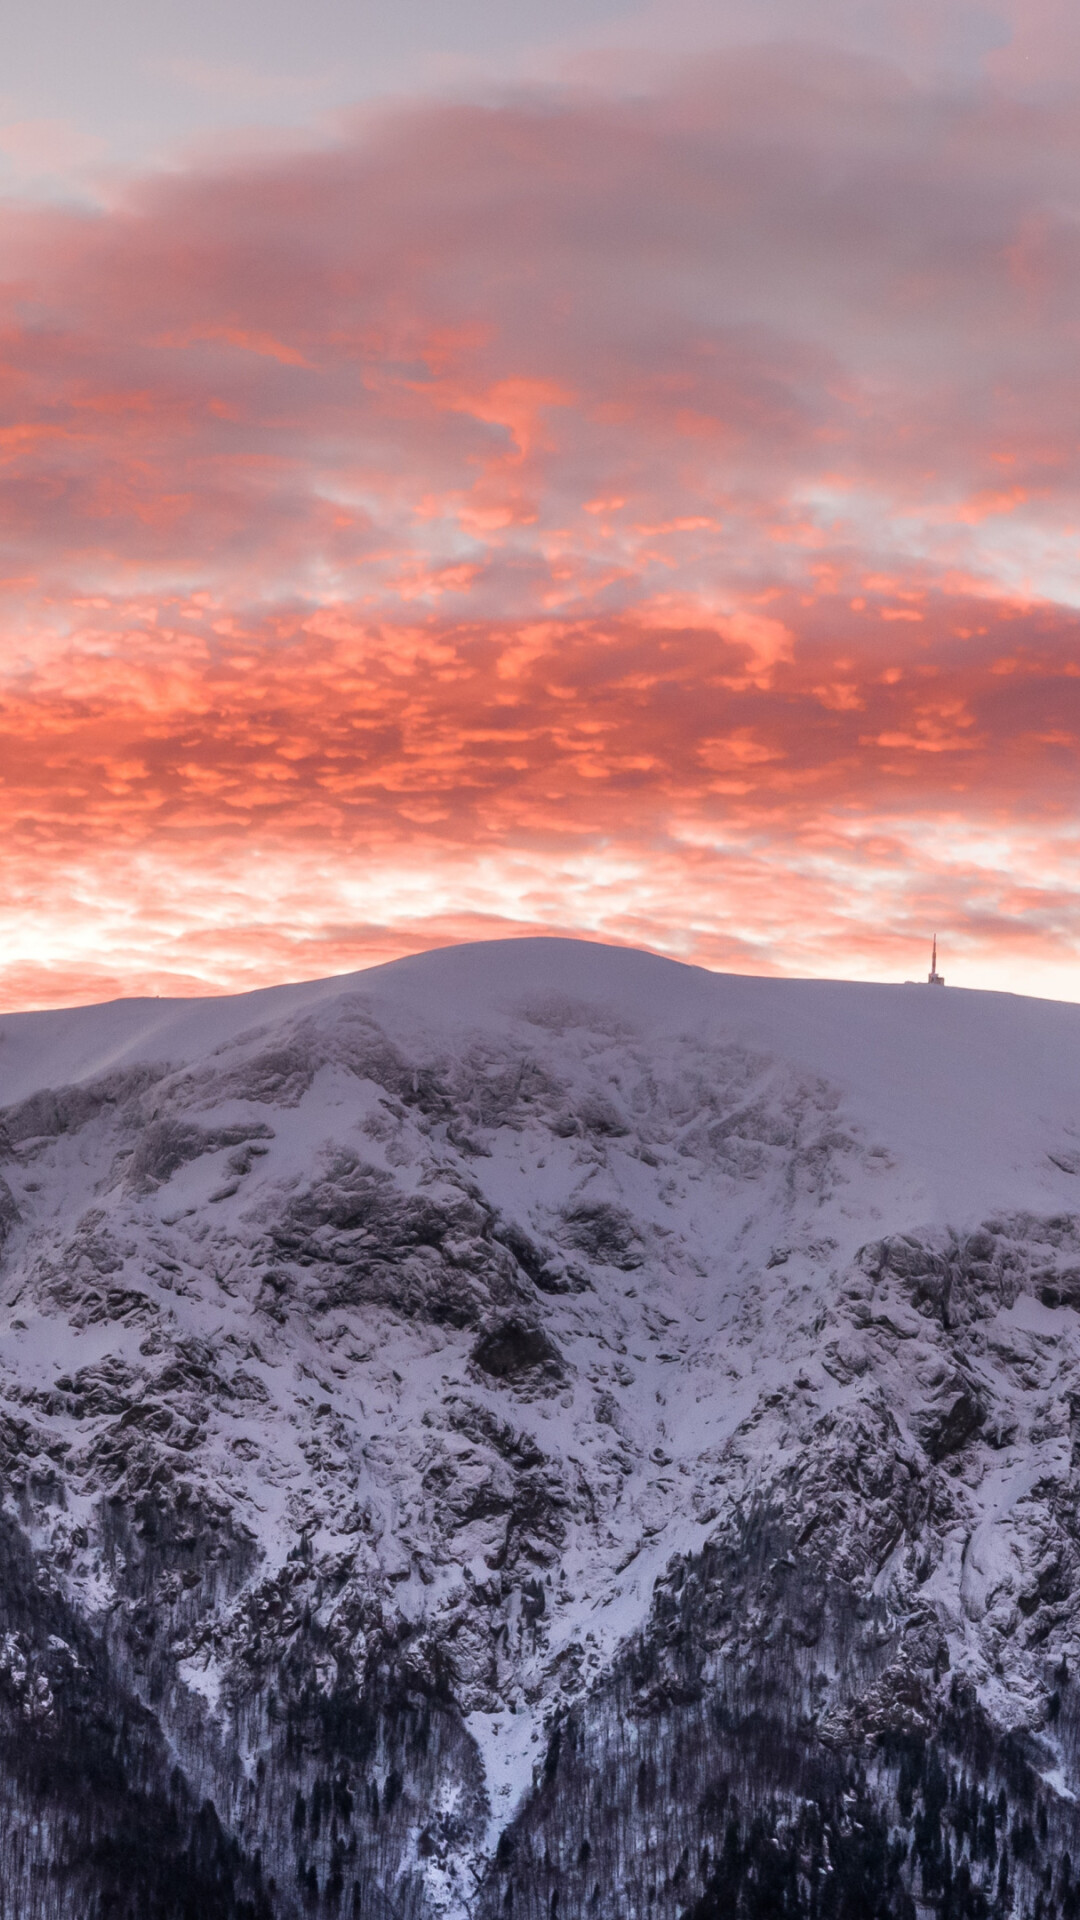 Glacier: Winter, Mountains, Sunset, Natural landscape, Snow cap, An ice mass. 1080x1920 Full HD Wallpaper.